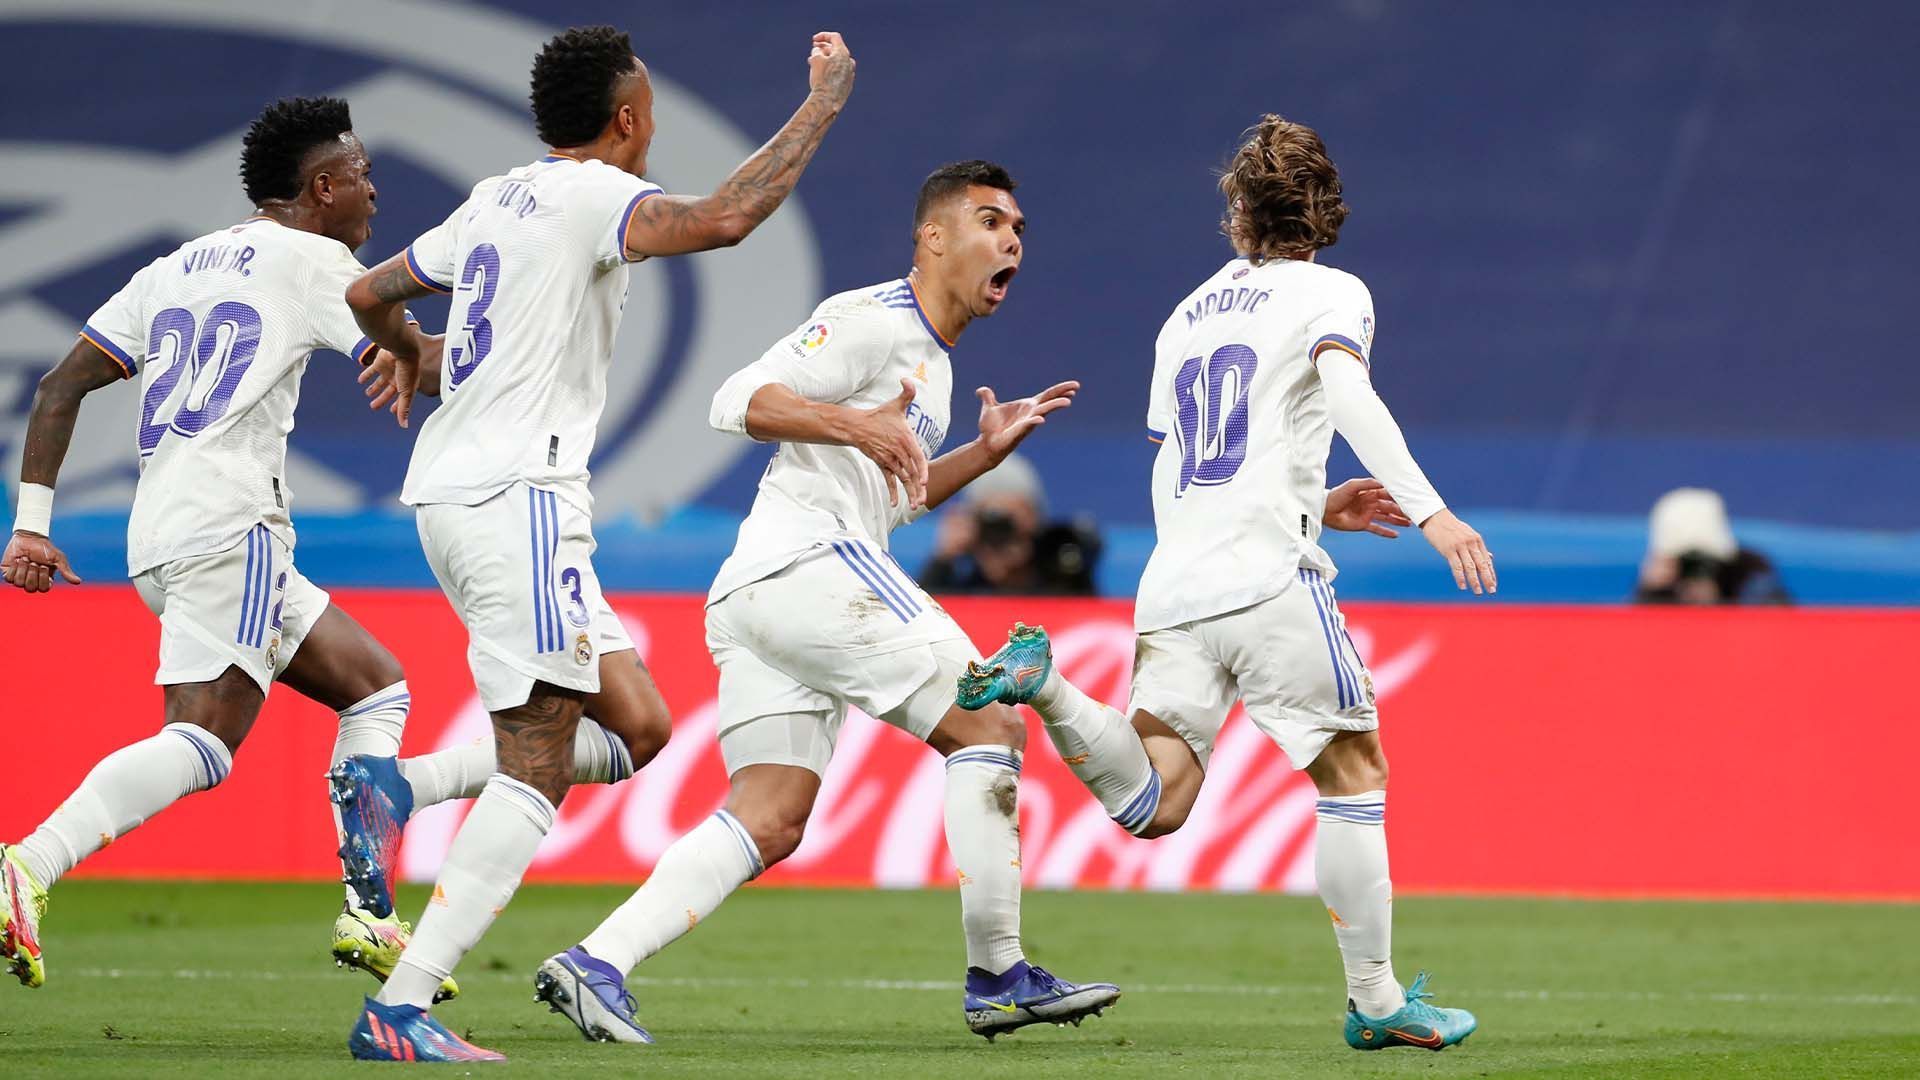 Real Madrid came from behind to thrash Real Sociedad 4-1 in La Liga.